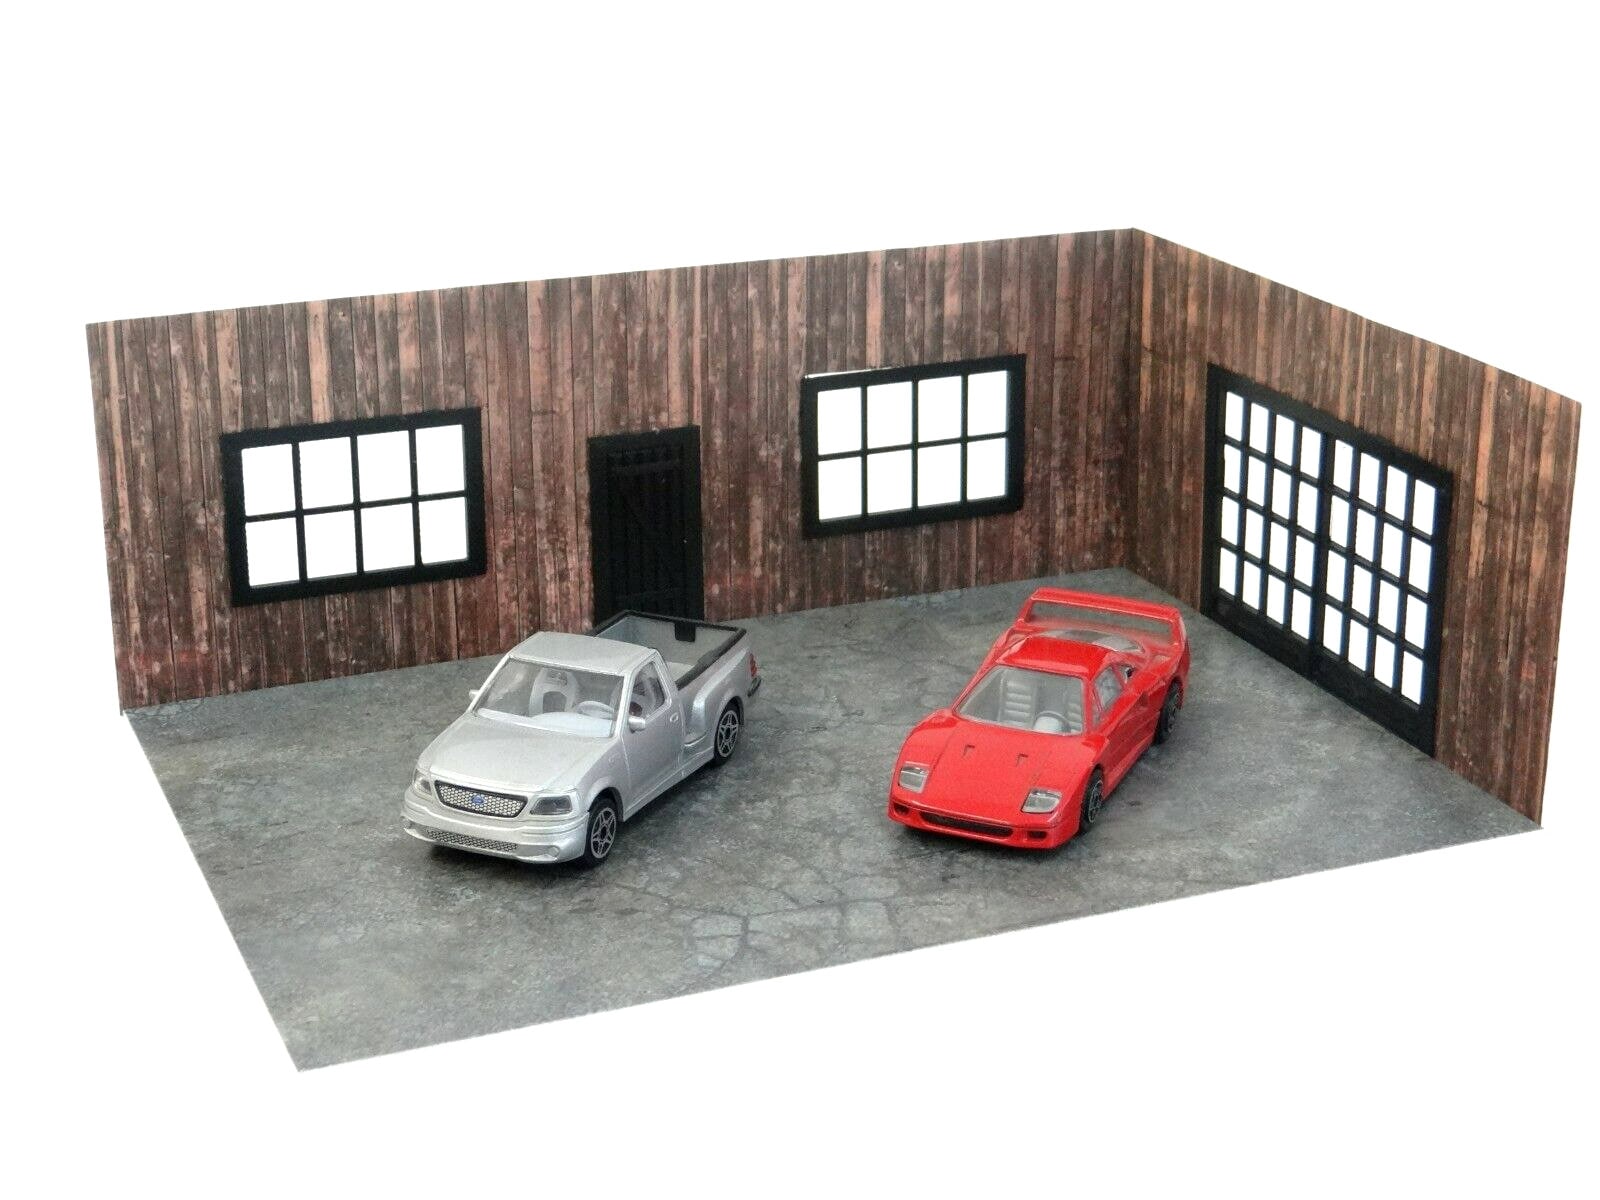 1-43 garage diorama box-carrying mechanic figurine 